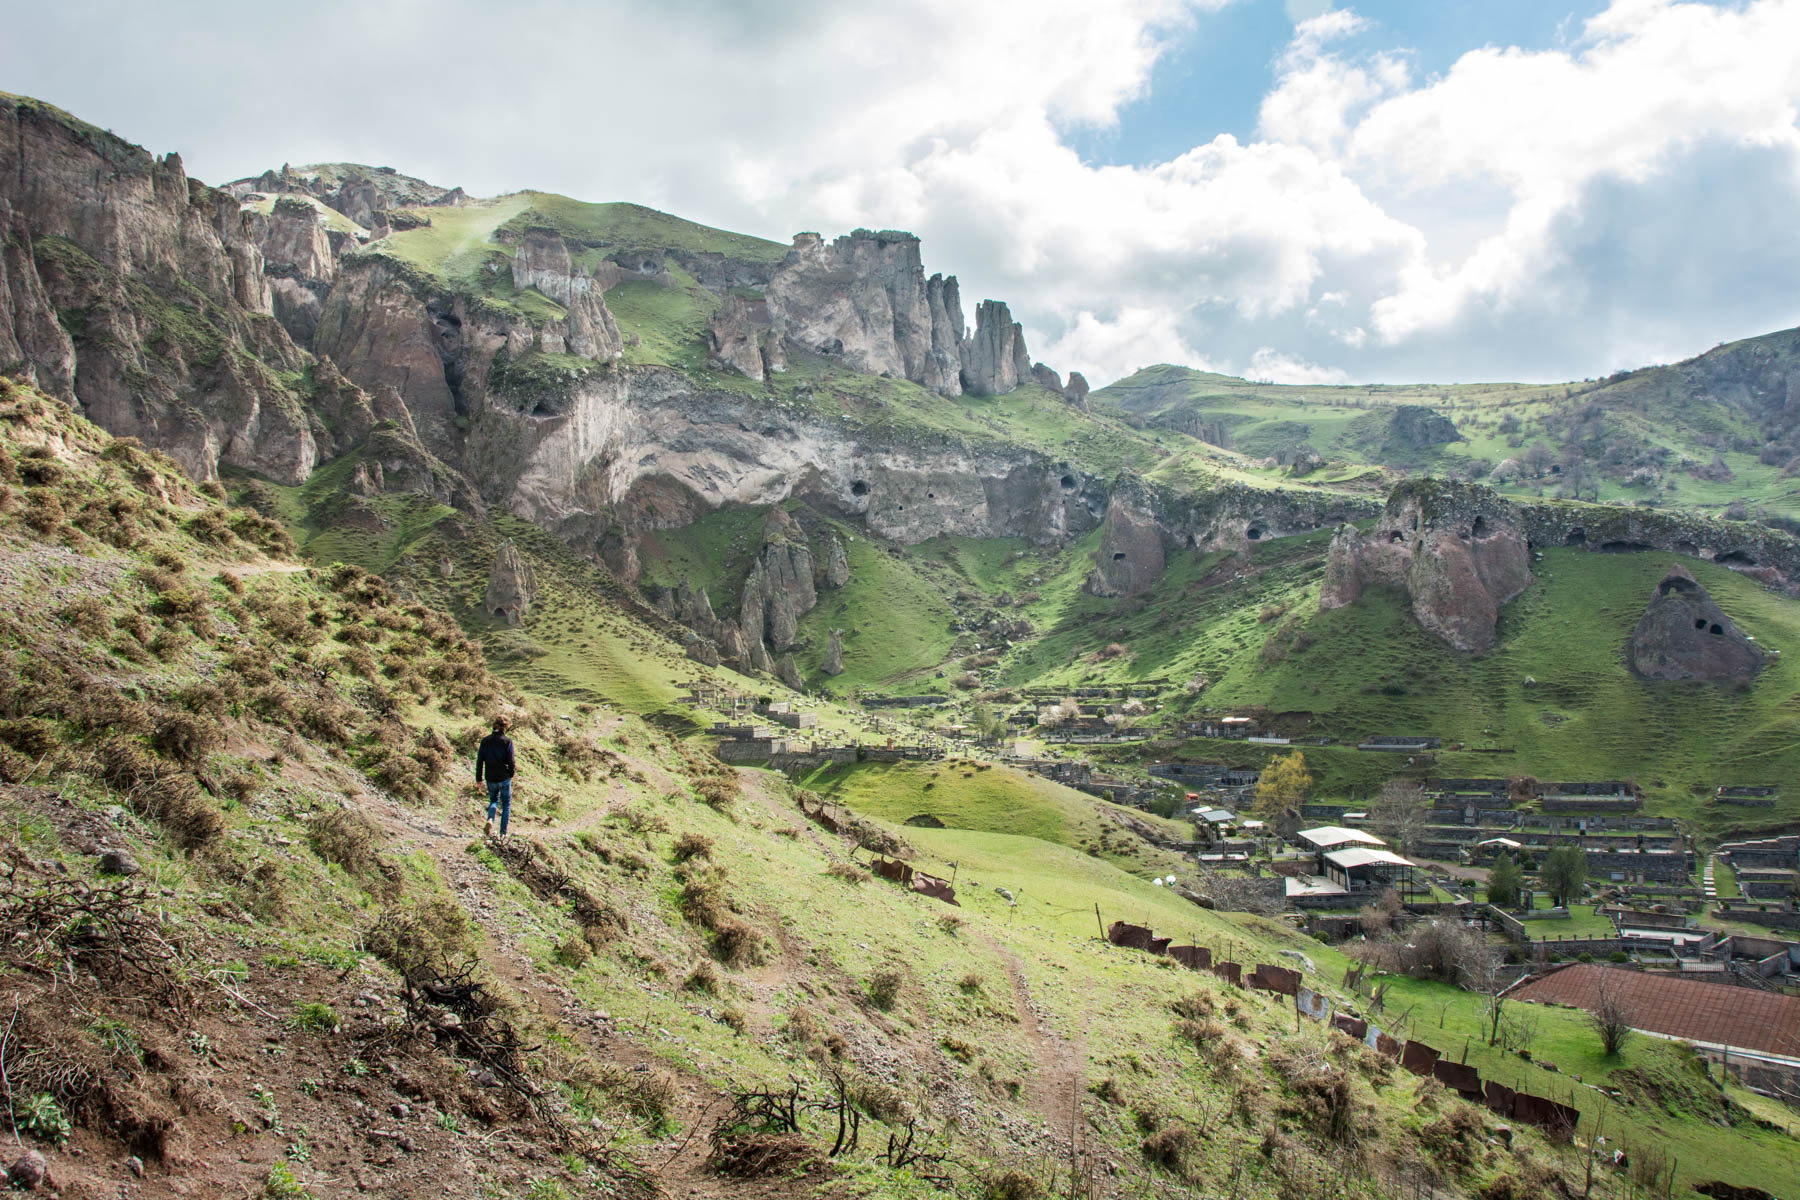 Sebastiaan exploring the rocky surroundings of Goris, Armenia - Lost With Purpose